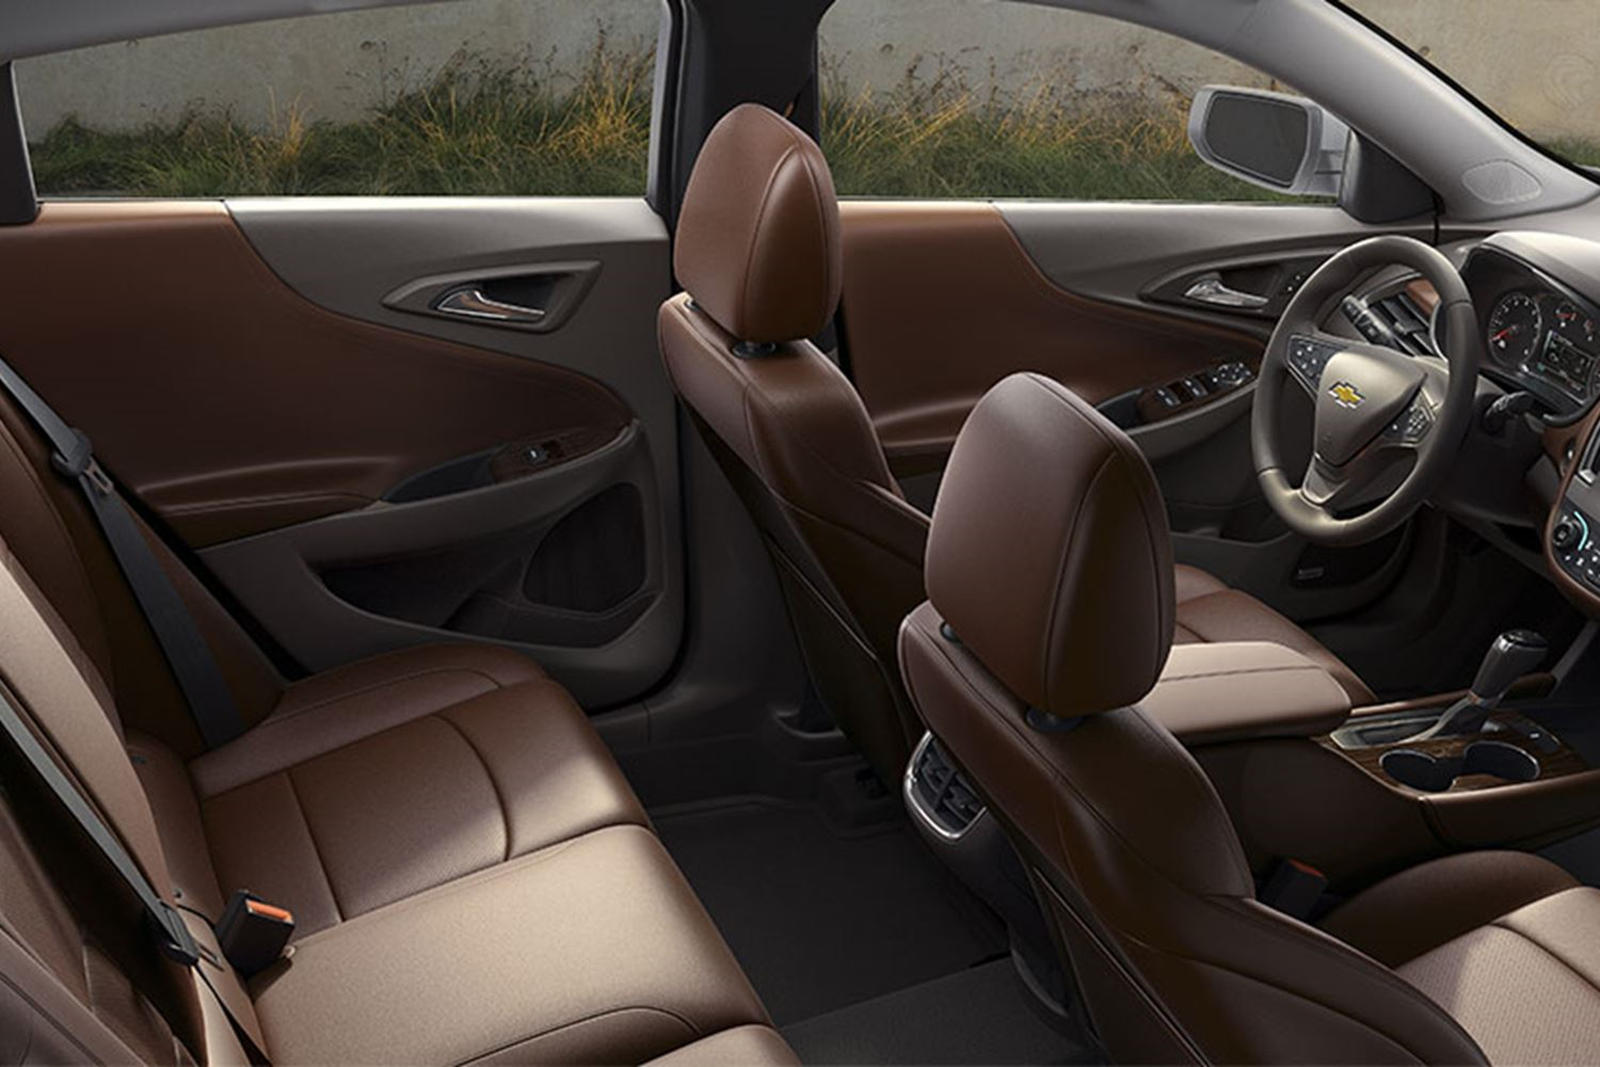 2016 Chevrolet Malibu Interior Overview